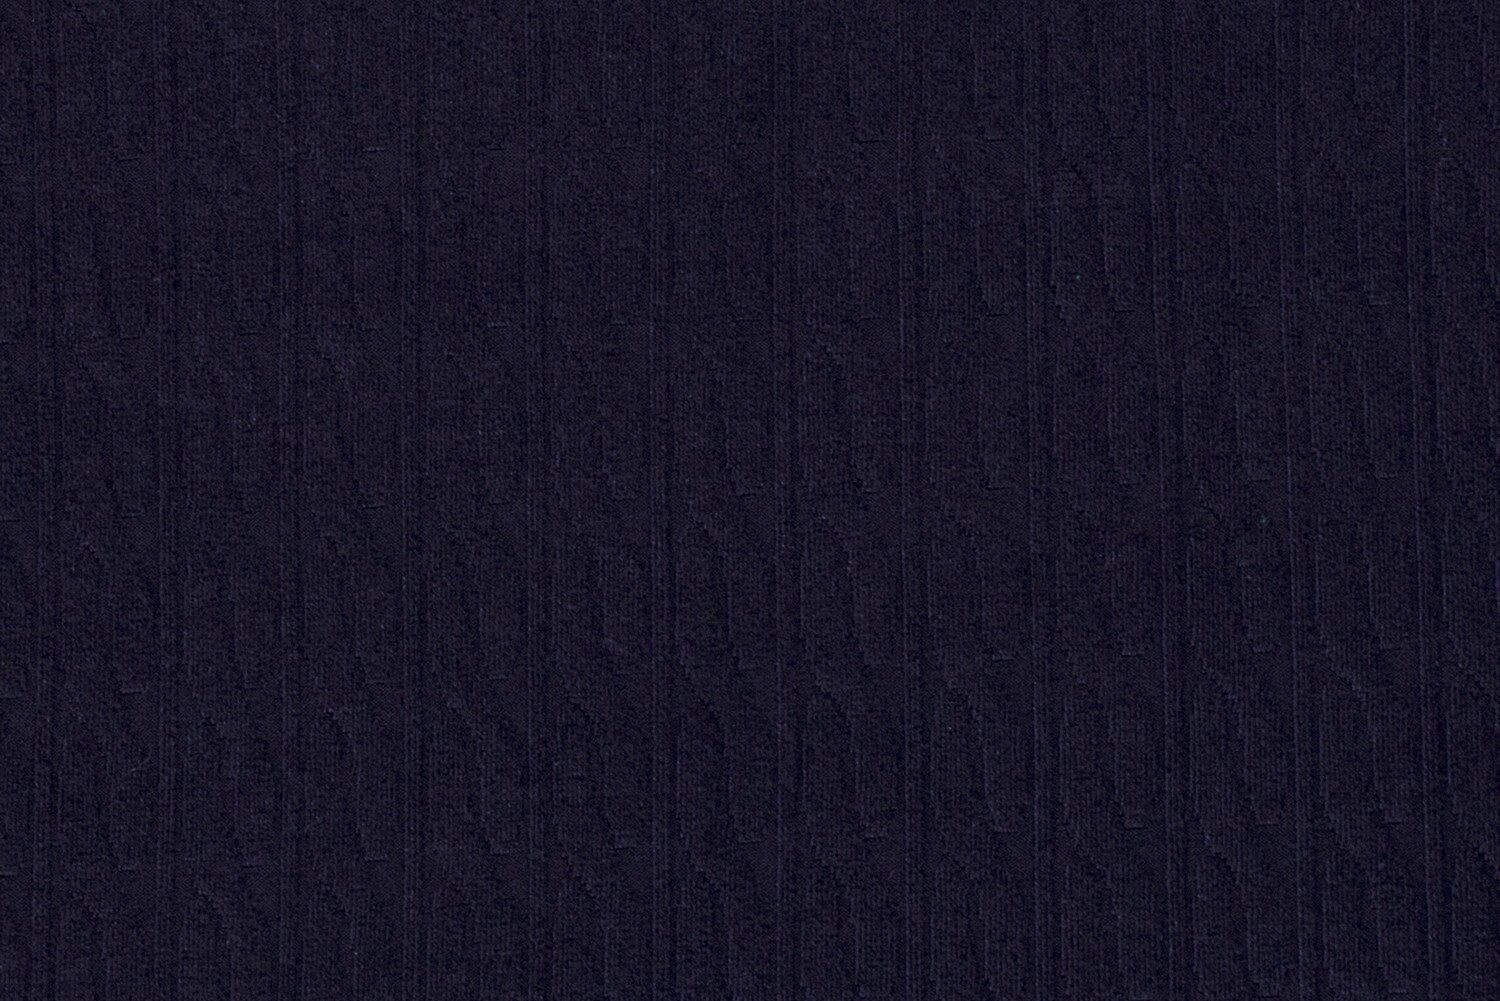 Kraan Staat bonen Kabel jersey stof, donkerblauw. A0598 - Stoffendorp